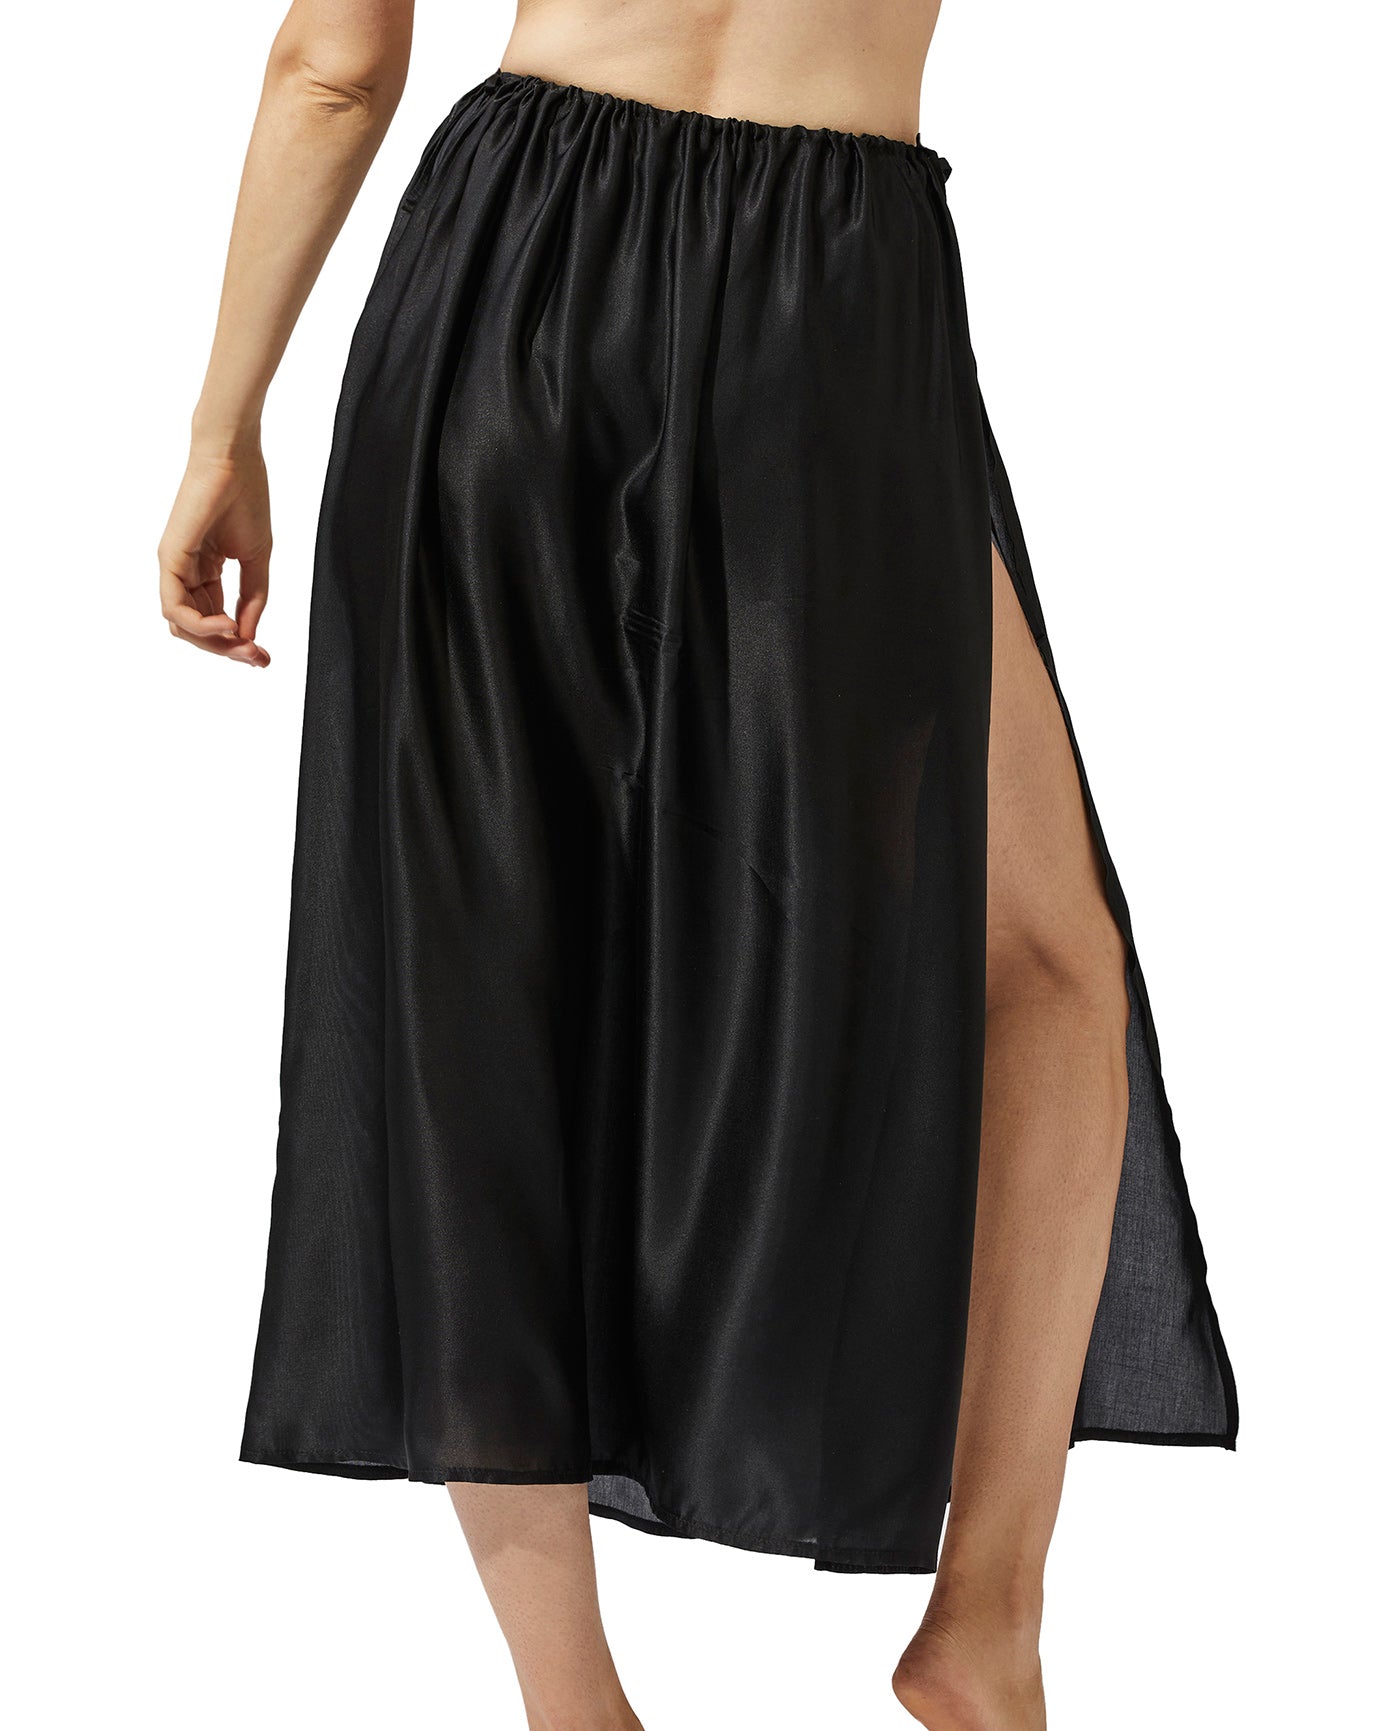 Back View Of Luma Long Cover Up Skirt | LUMA IVY BLACK